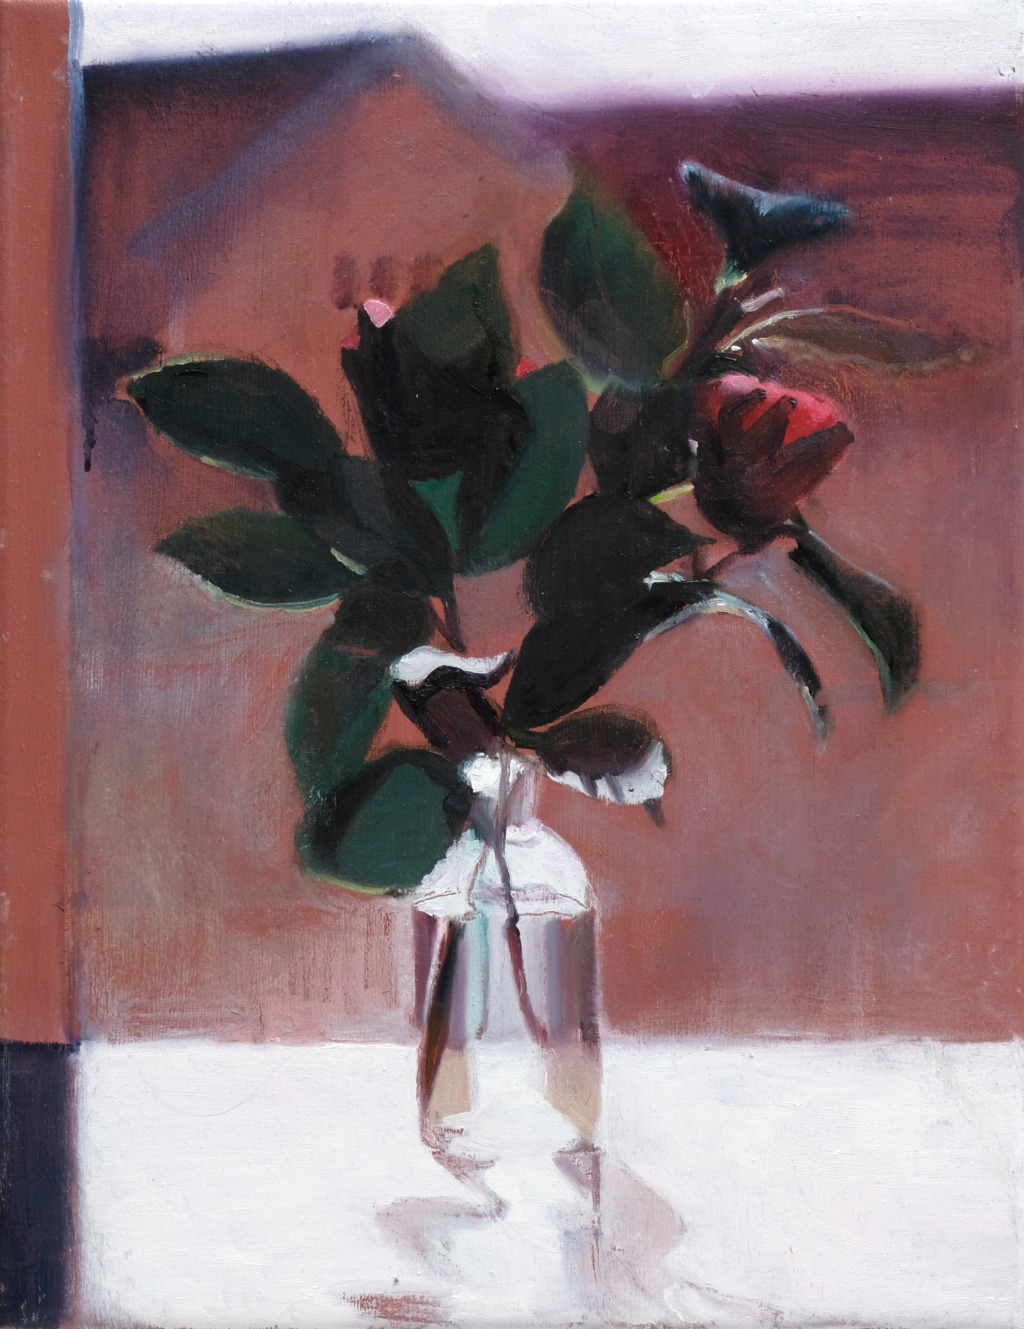 Andrea Muheim, Rösli von Ursula, 2021
Oil on canvas
39 x 30 cm